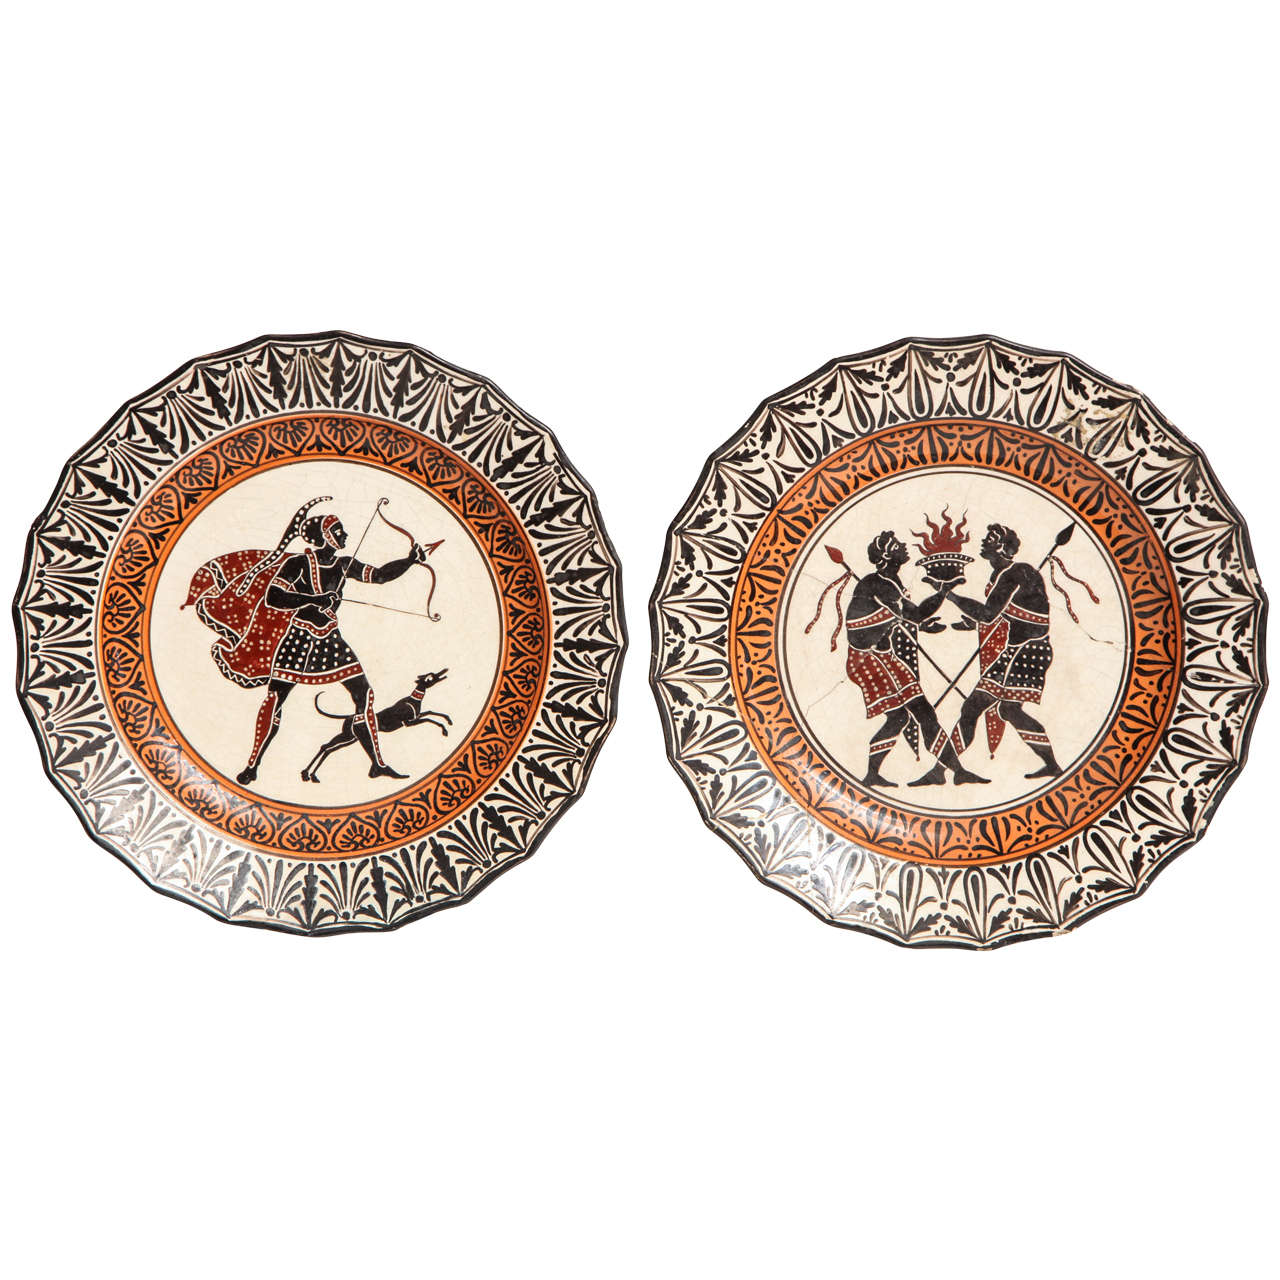 Two 19th Century Giustiniani Plates